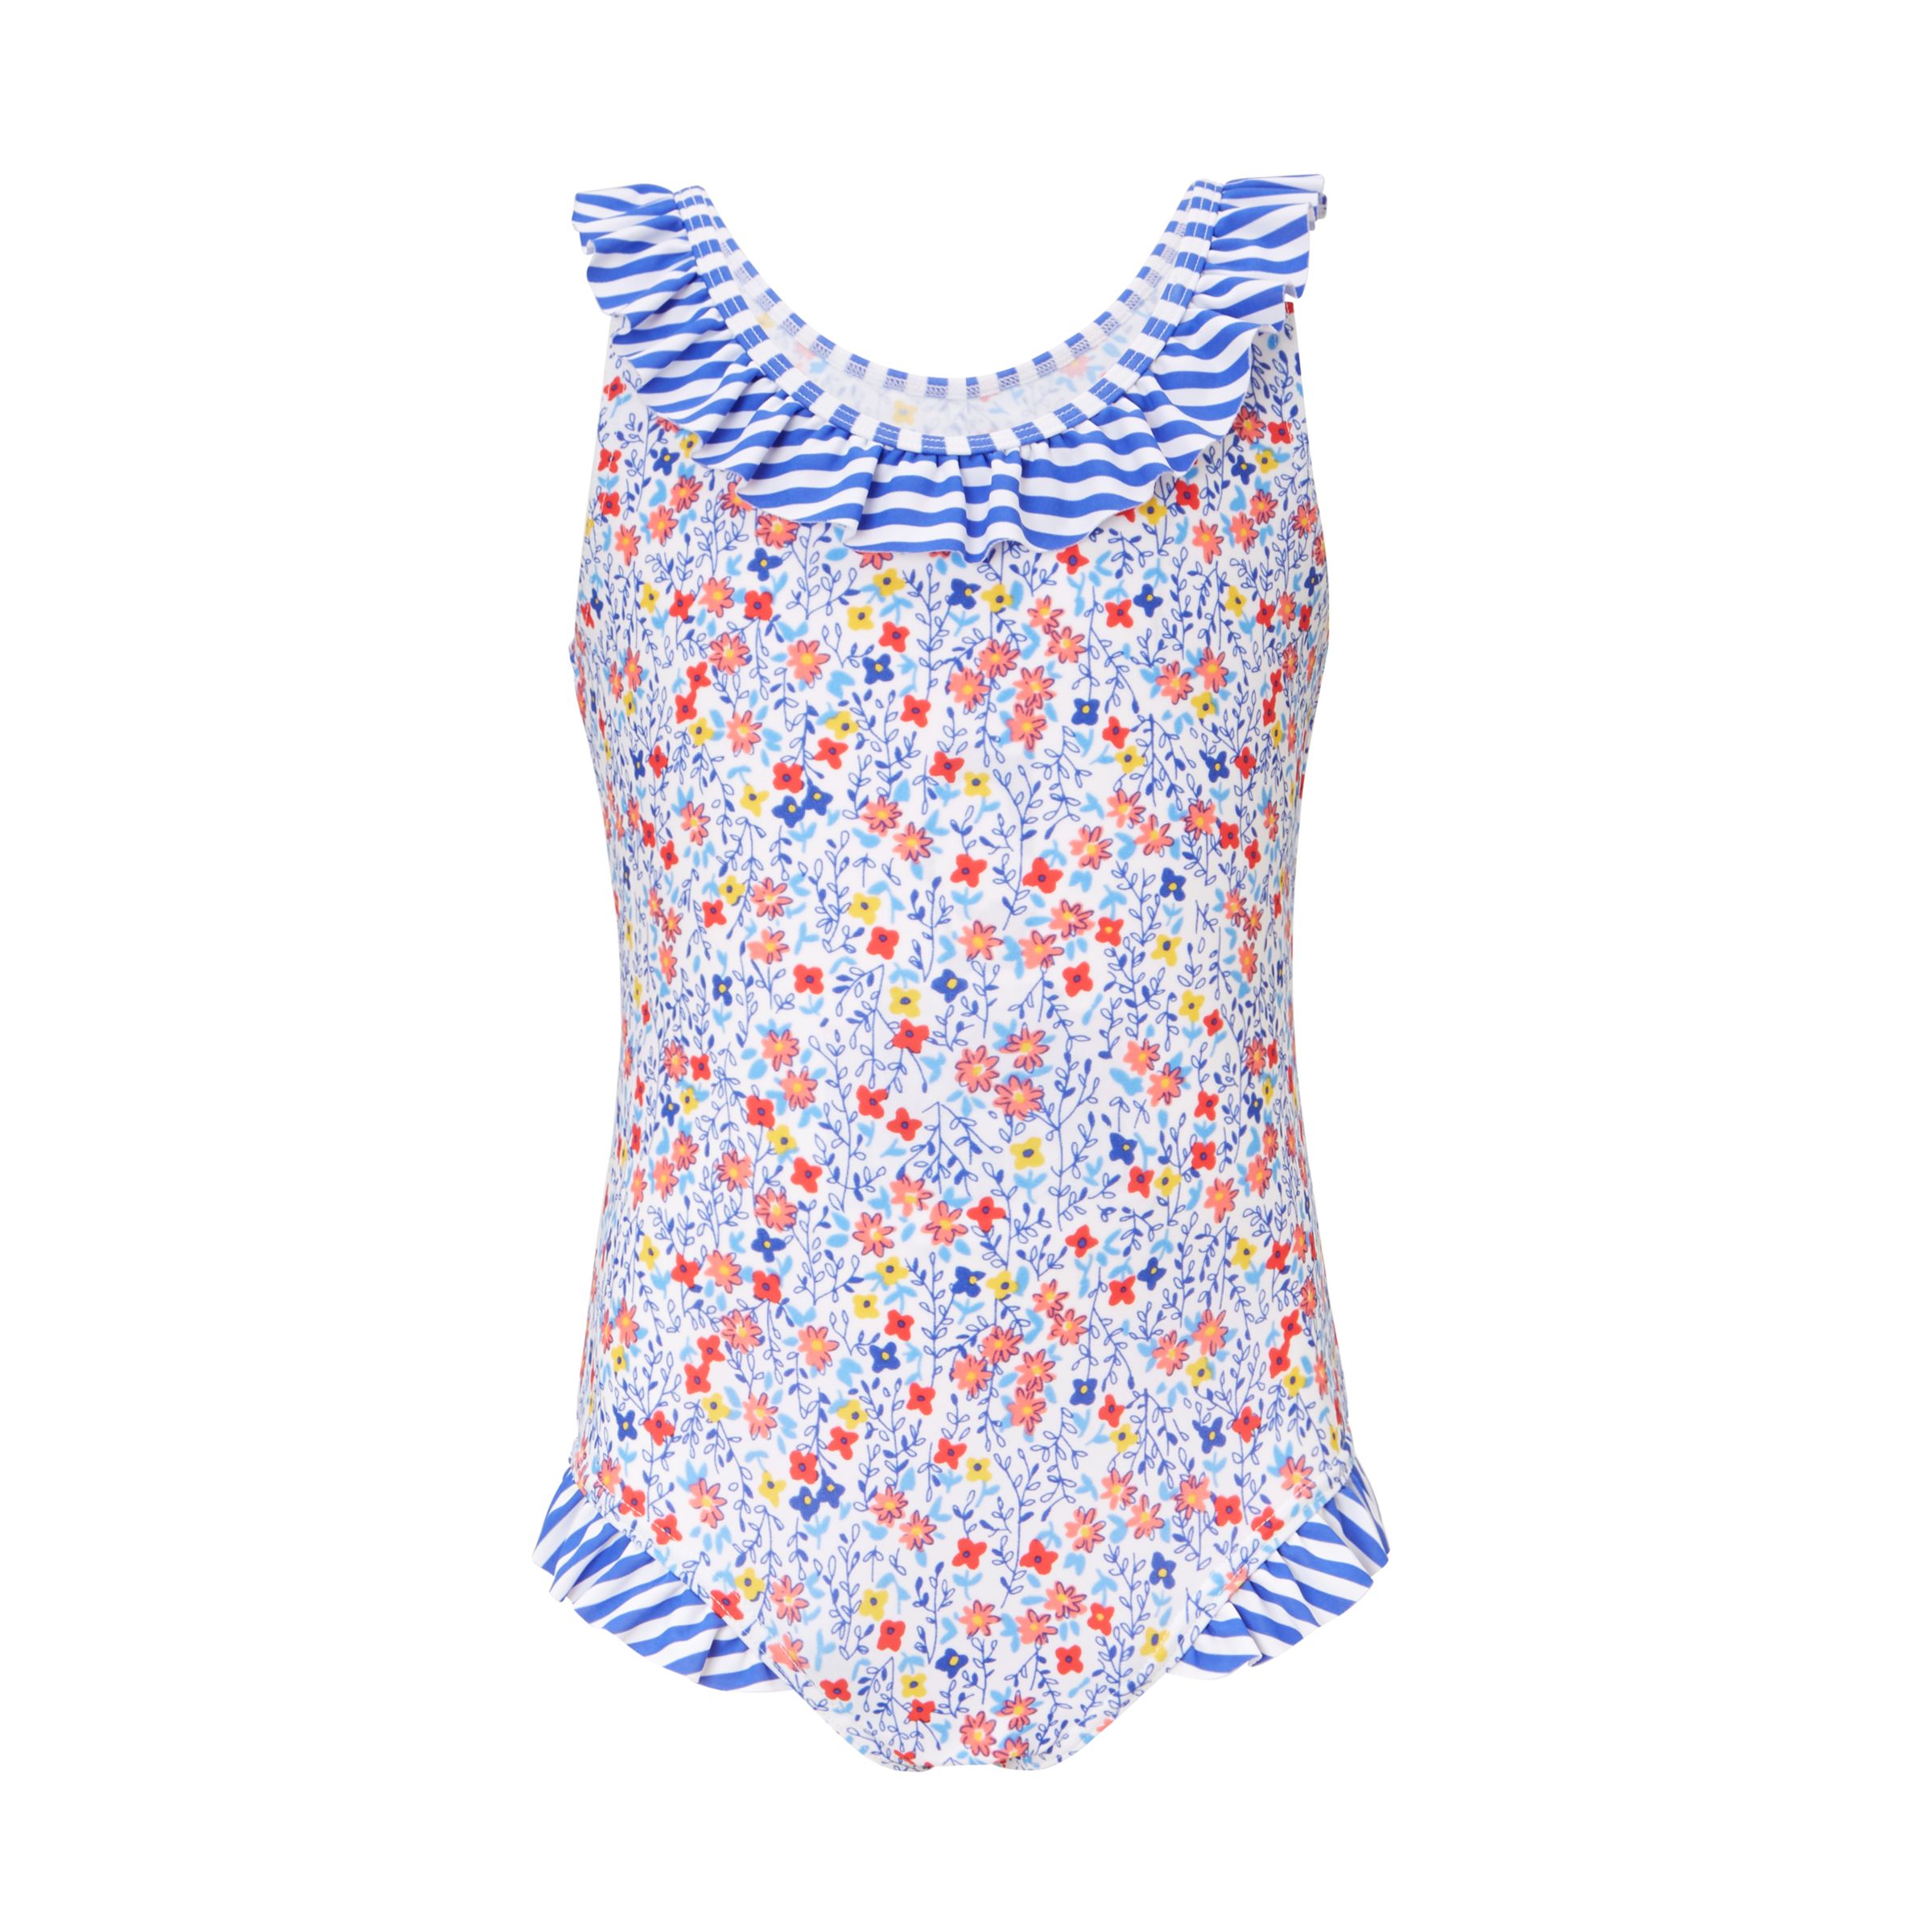 John Lewis & Partners Girls' Micro Floral Swimsuit, Multi